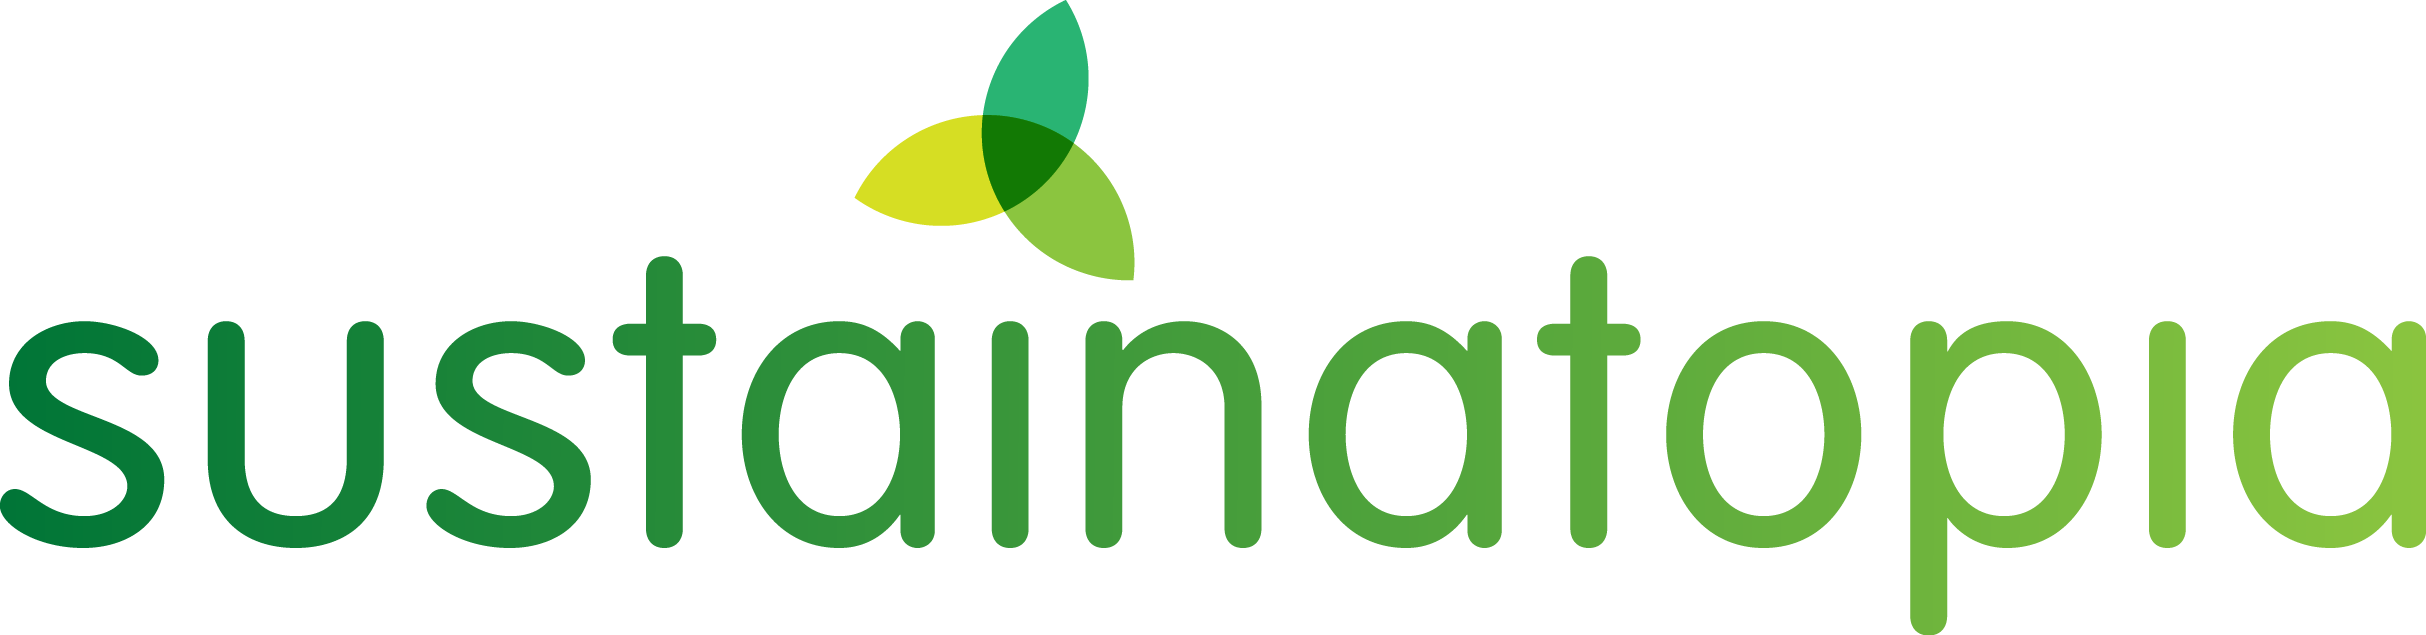 Sustainatopia logo